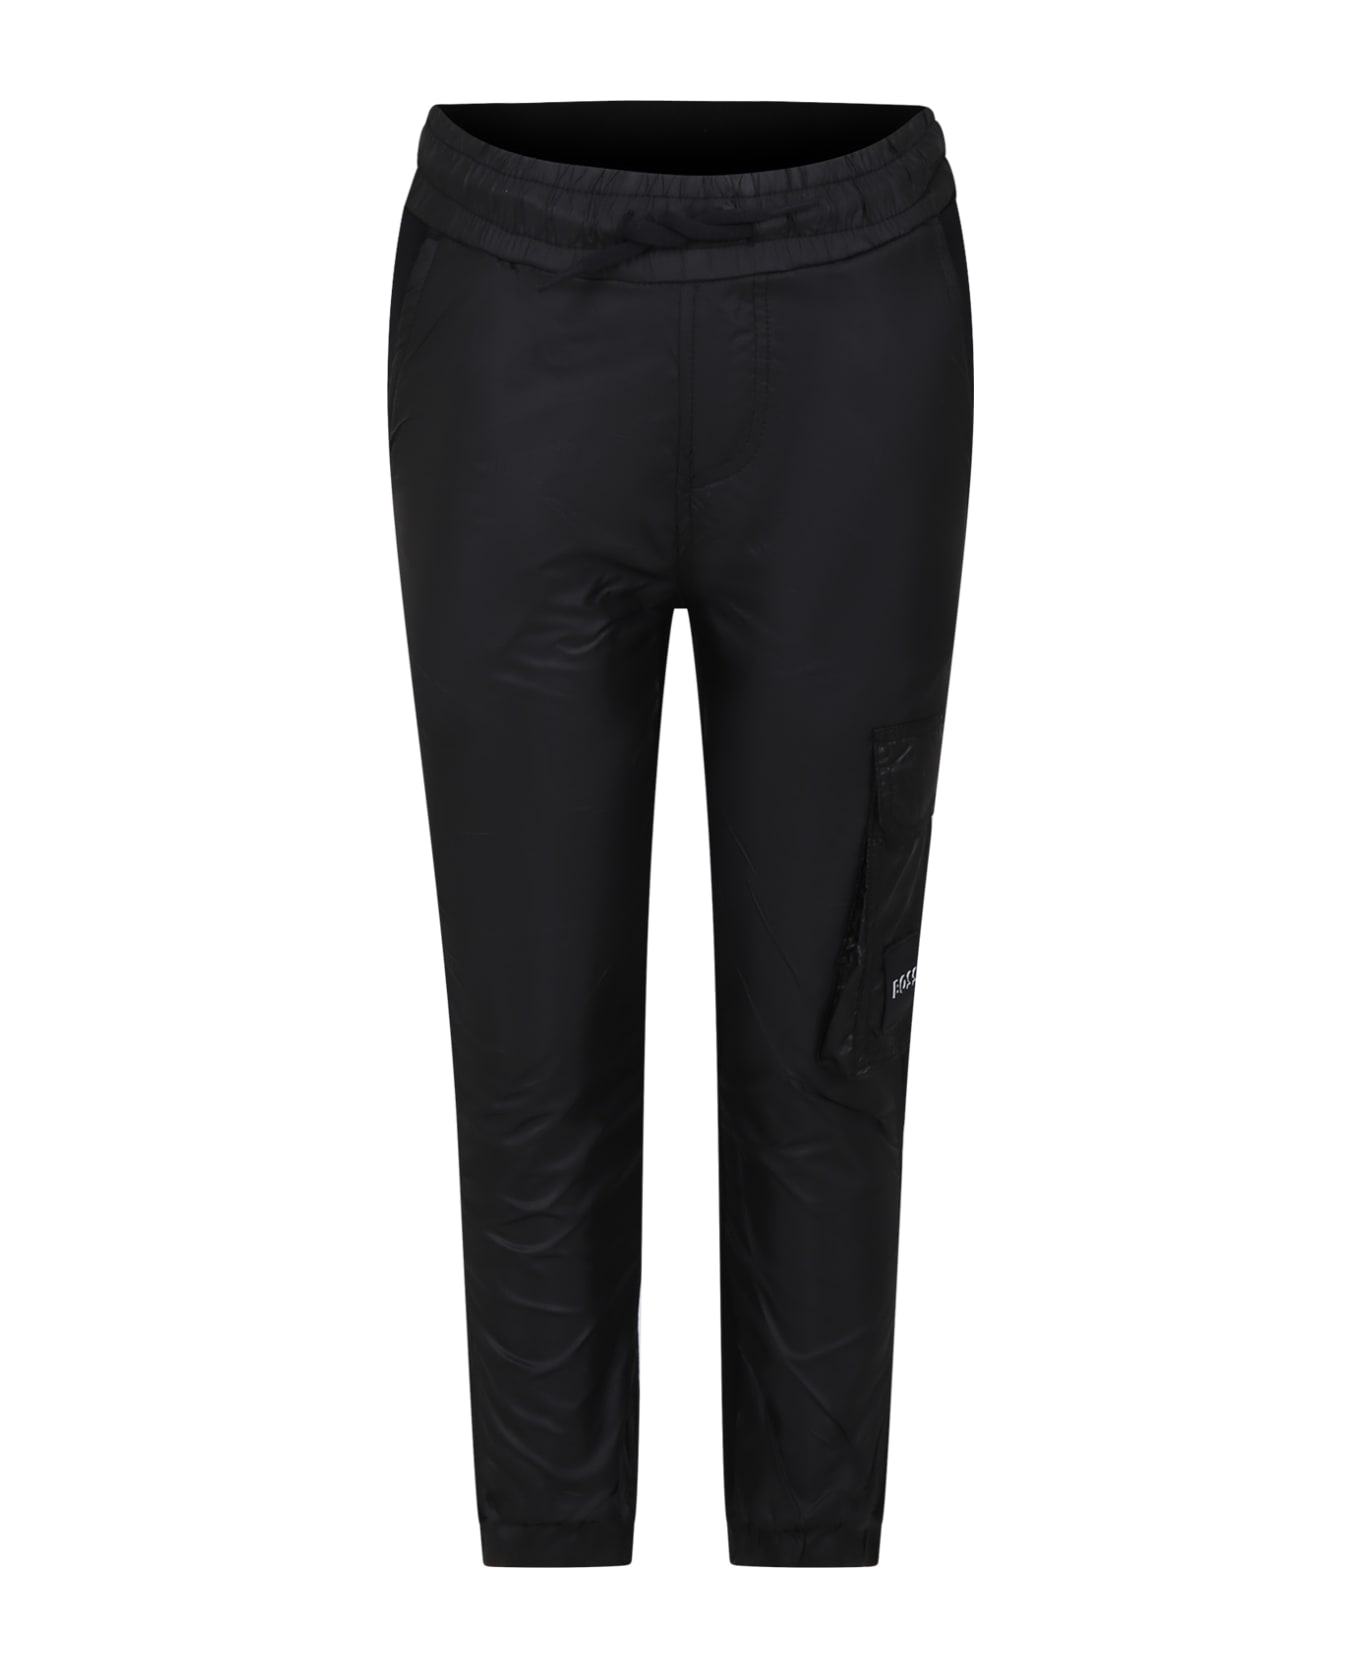 Hugo Boss Black Trousers For Boy With Logo - Black